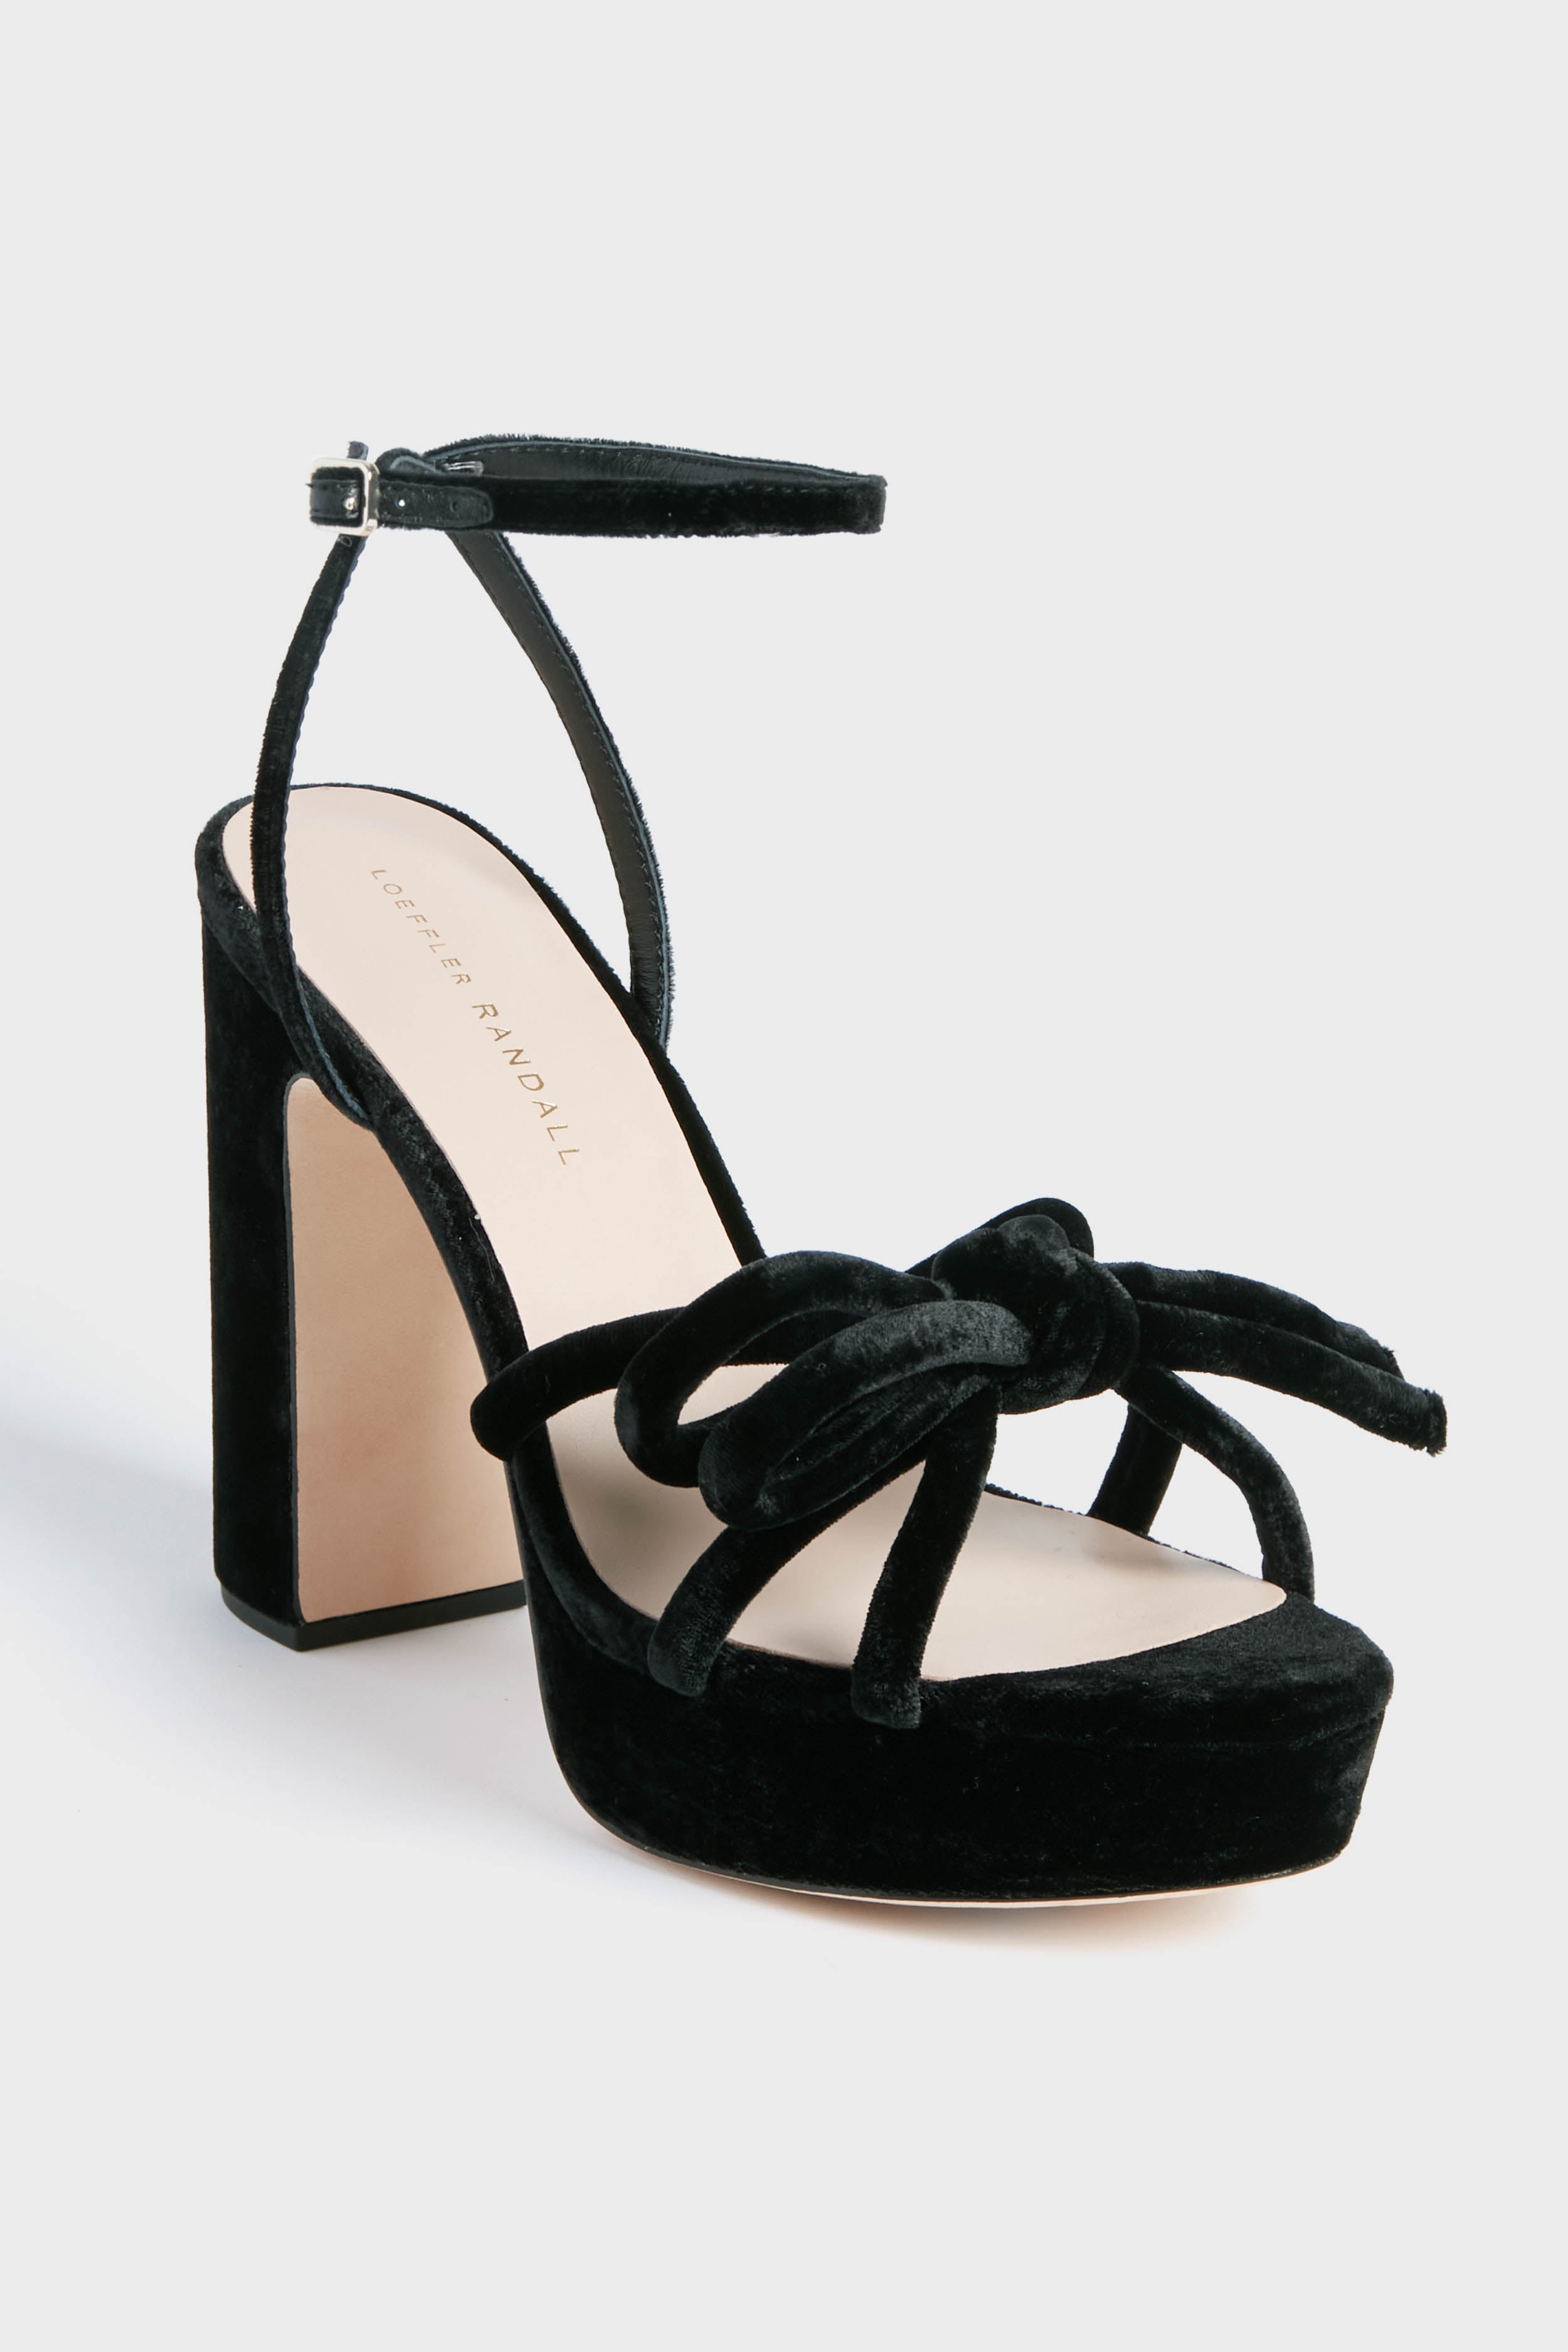 TUK Footwear Womens Black Velvet Bow Spice Platform Heel Size 10 | eBay